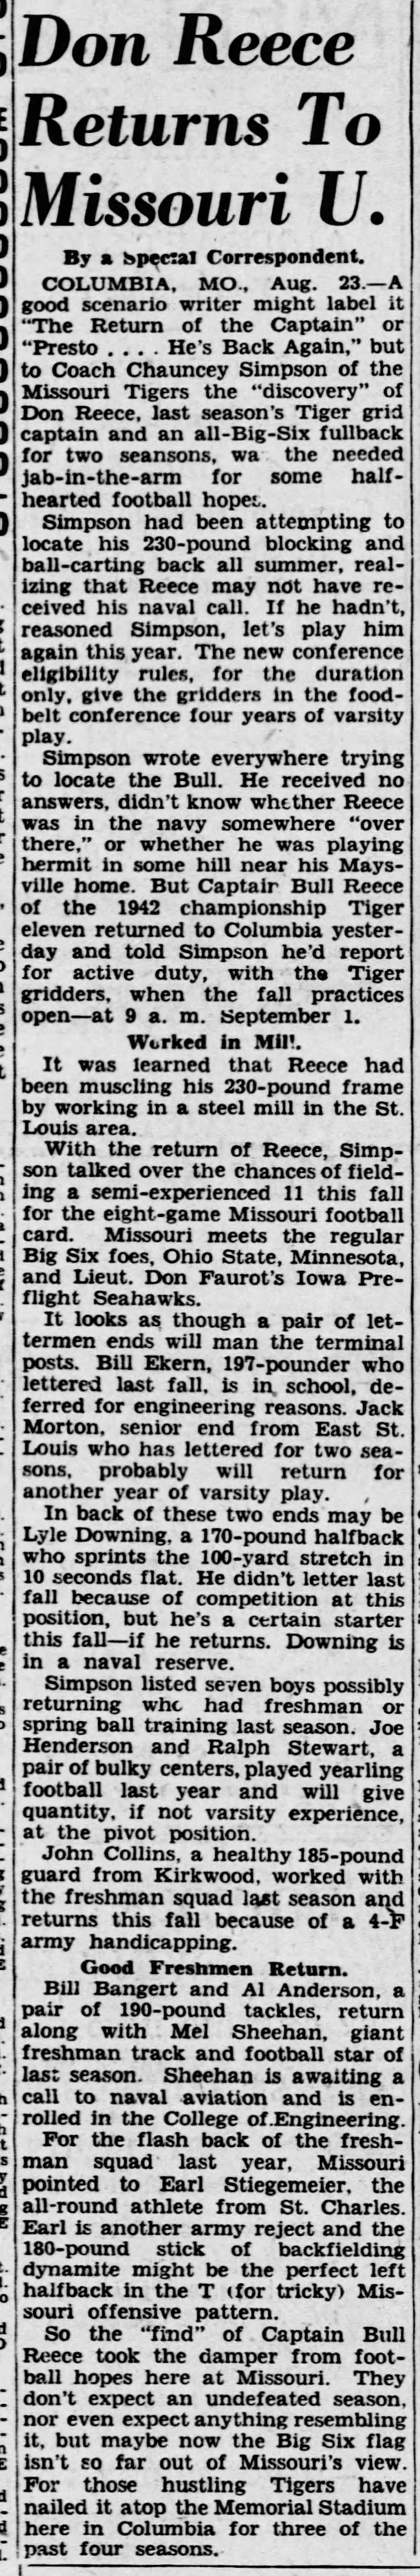 Don Reece Returns To Missouri U.